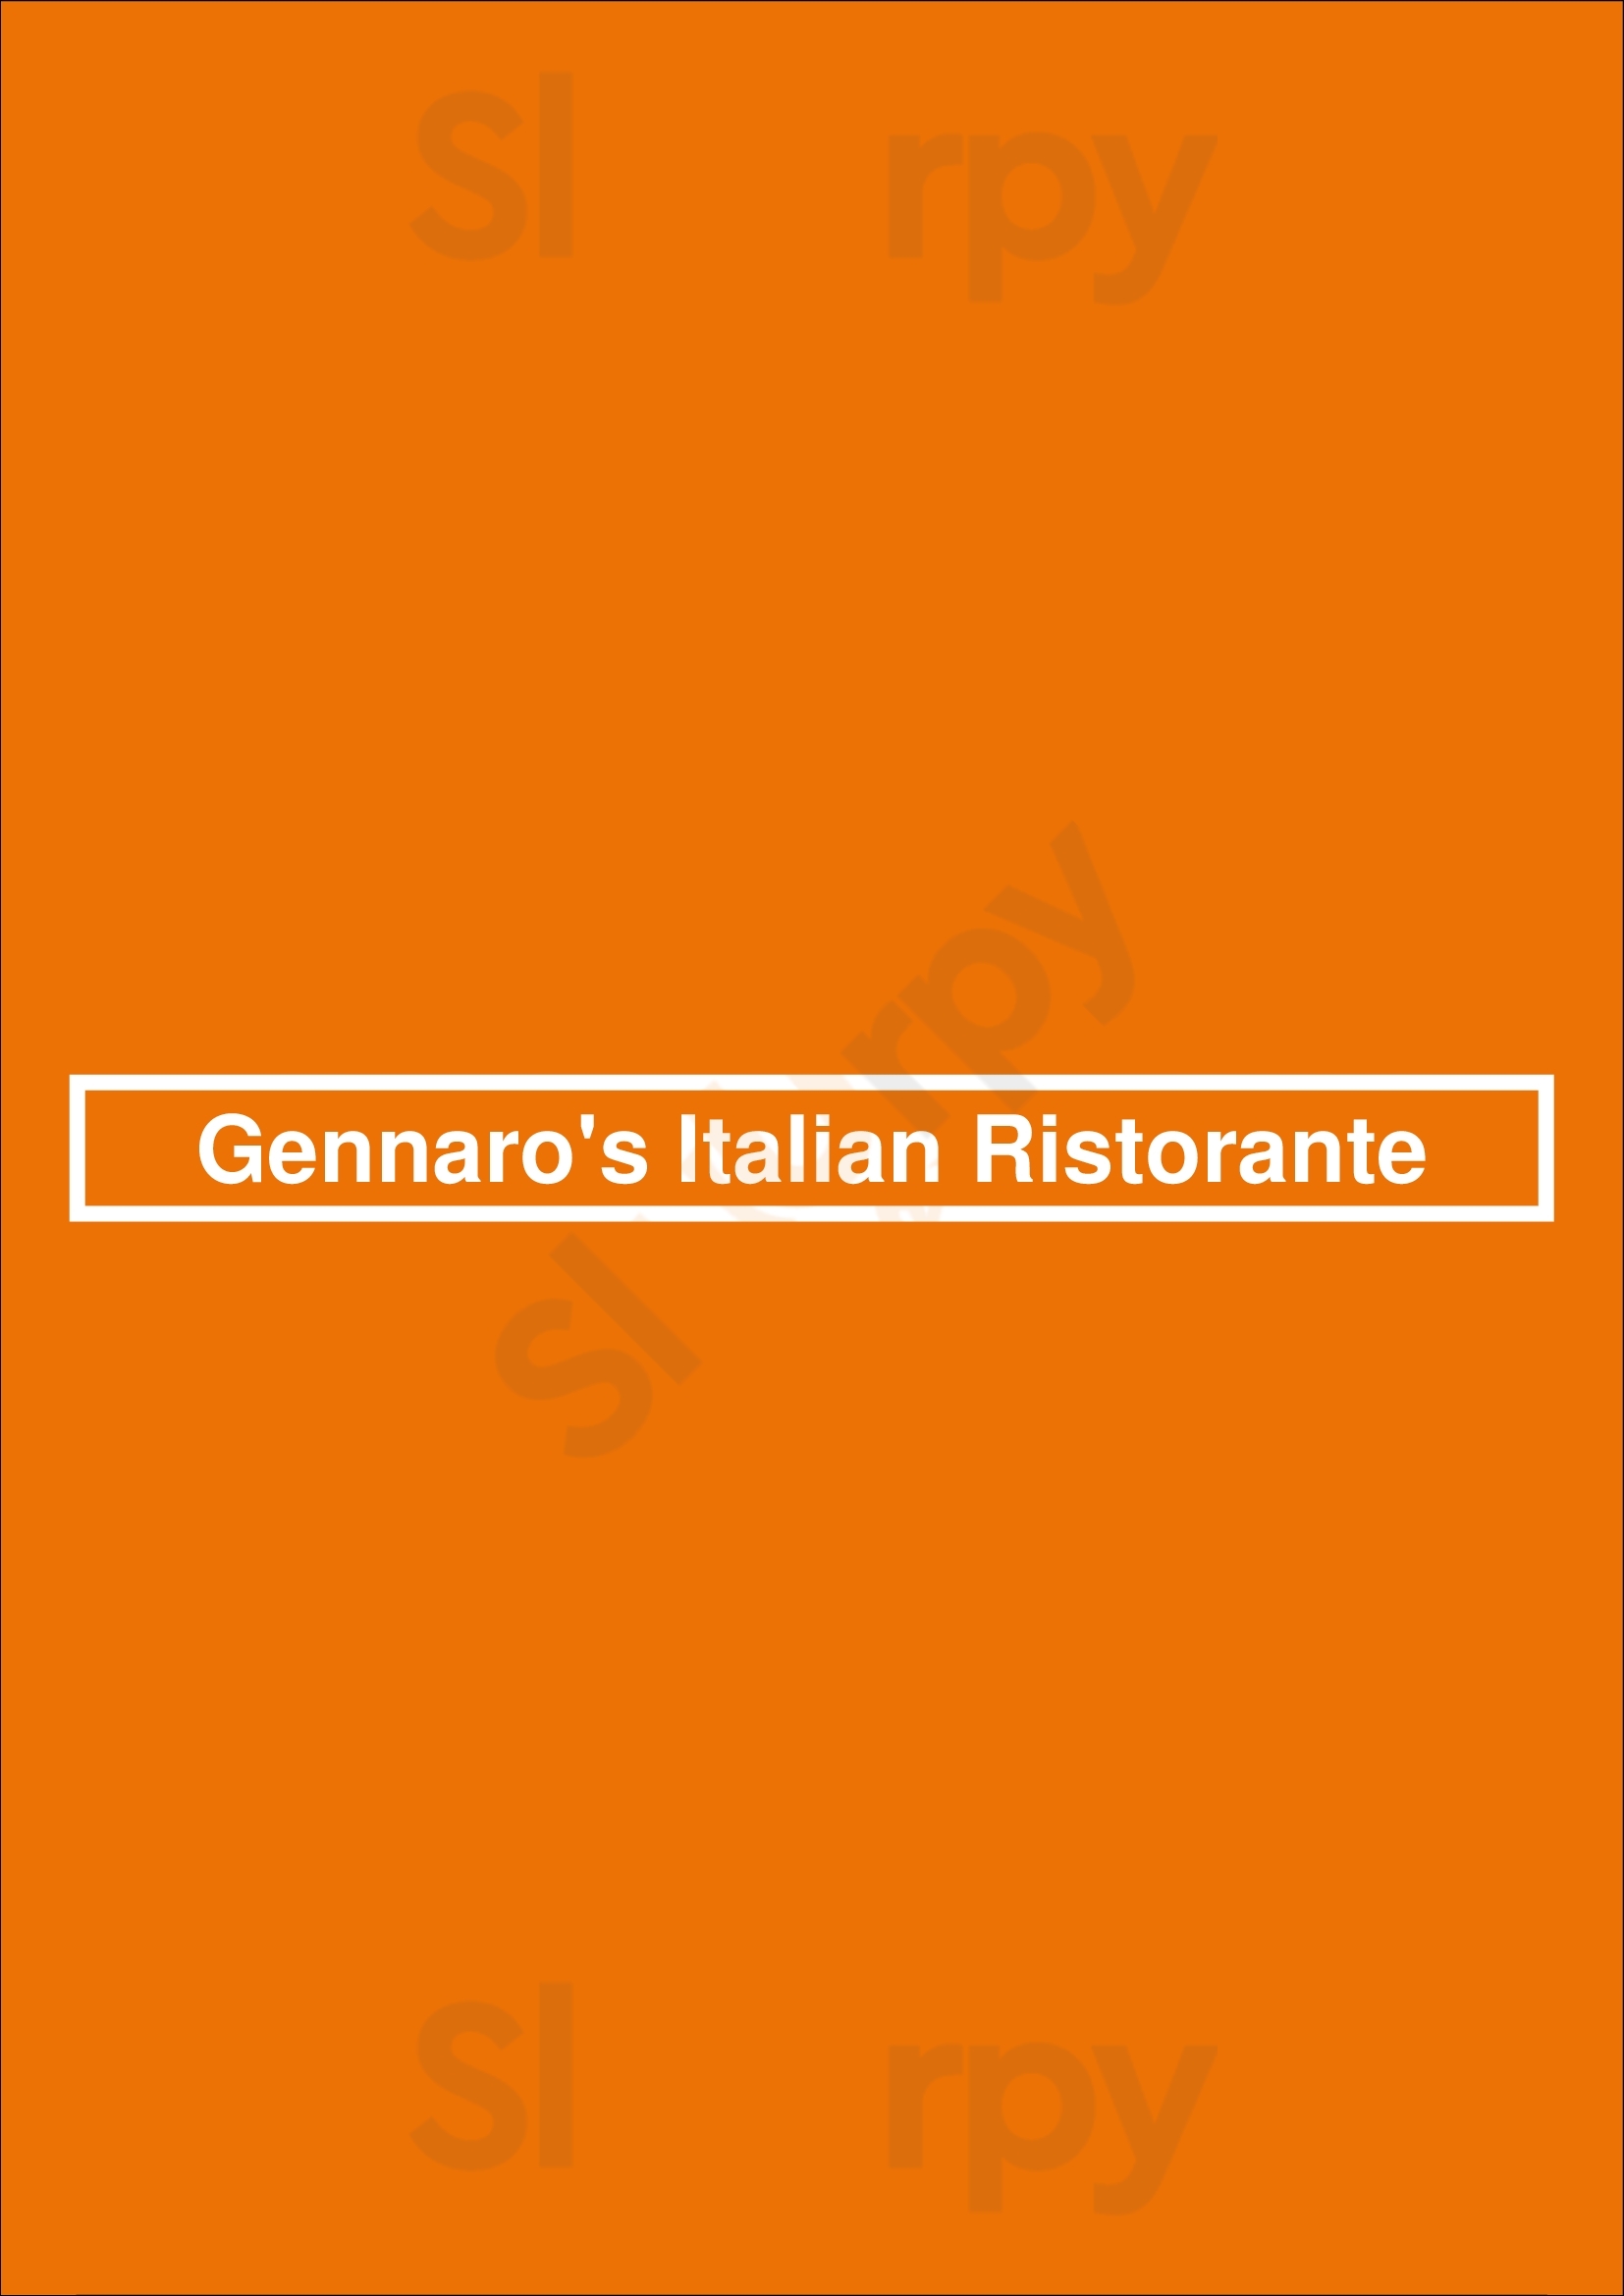 Gennaro's Italian Ristorante Charleston Menu - 1